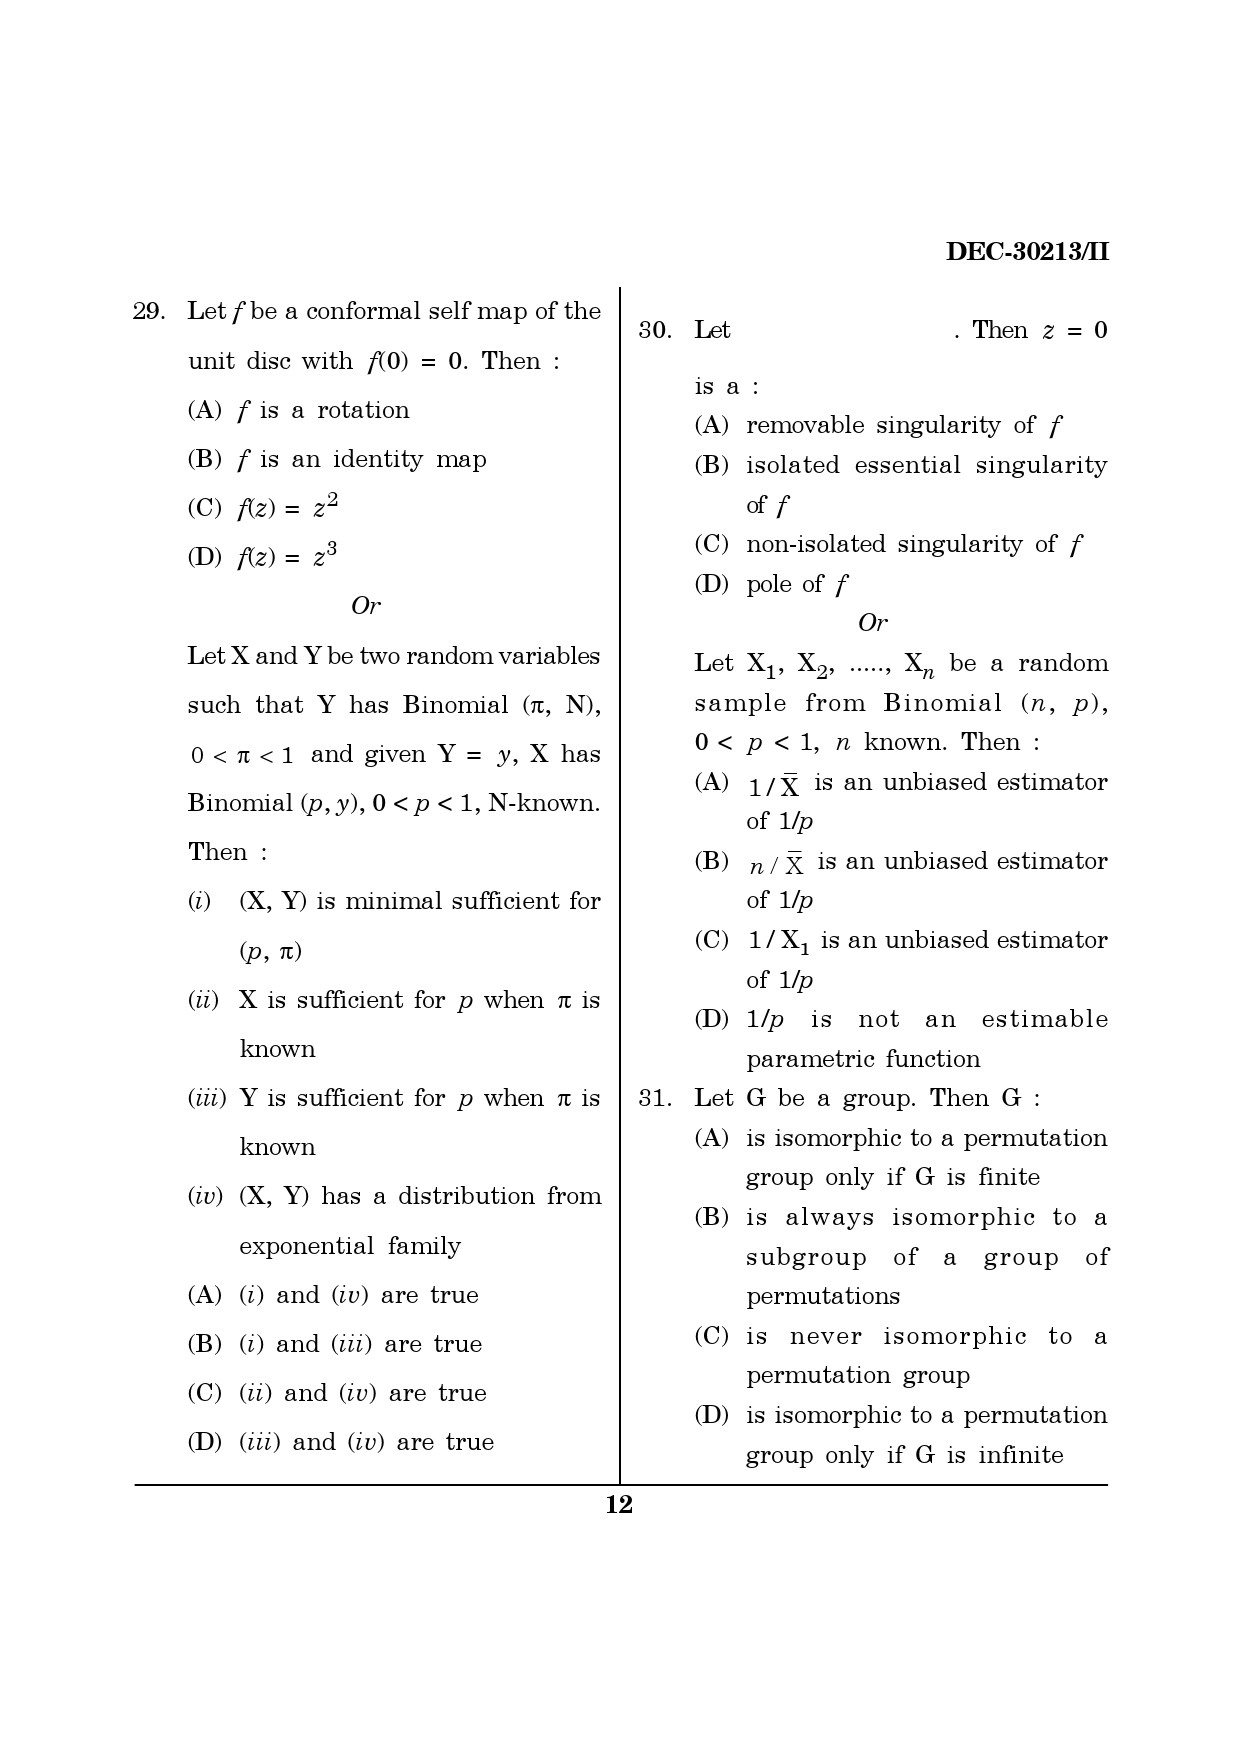 Maharashtra SET Mathematical Sciences Question Paper II December 2013 11